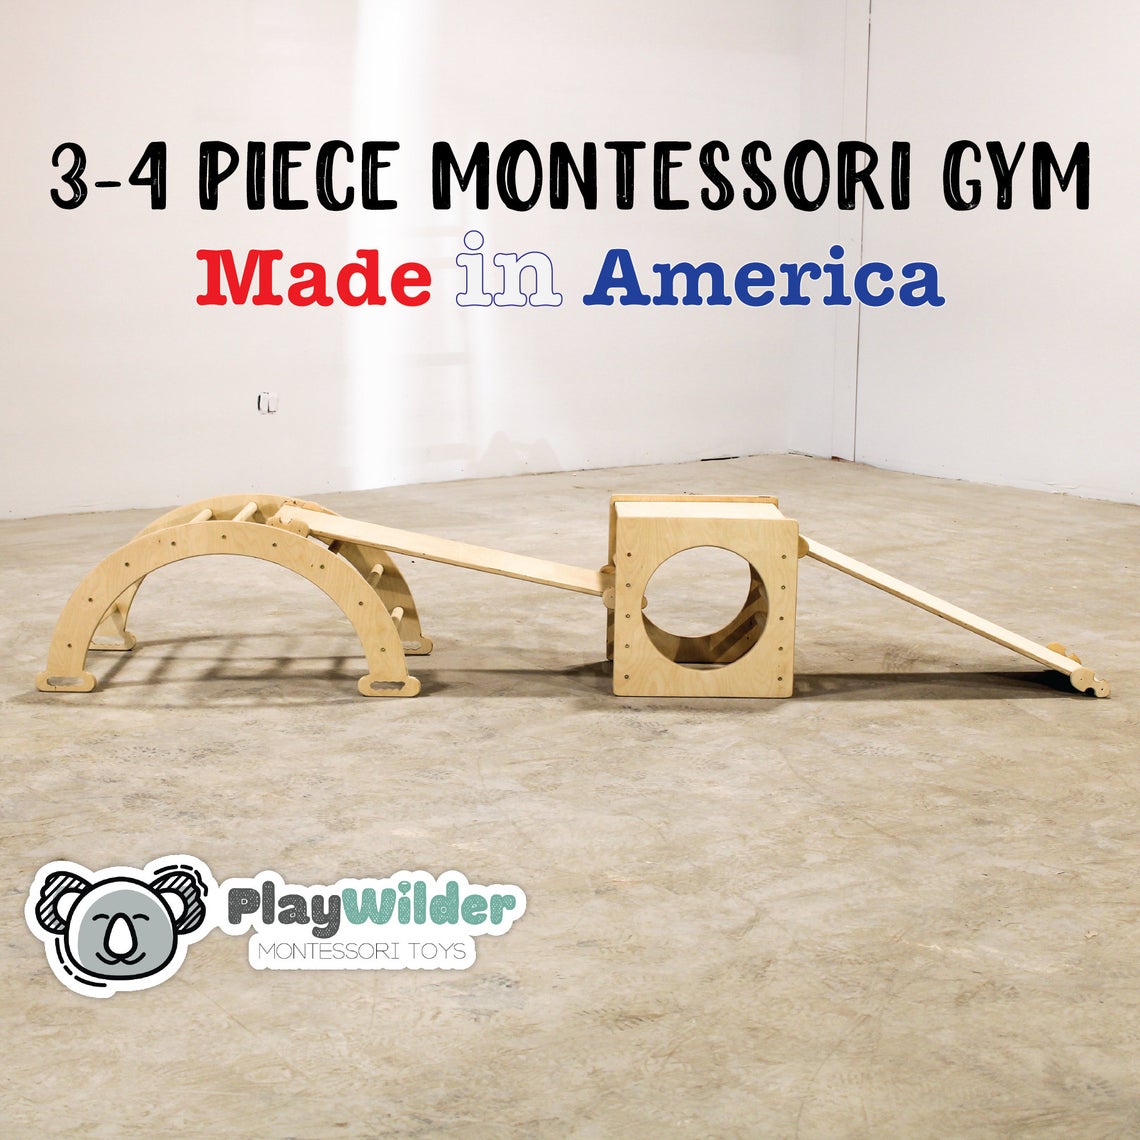 The Montessori Arch + Cube Climbing Gym